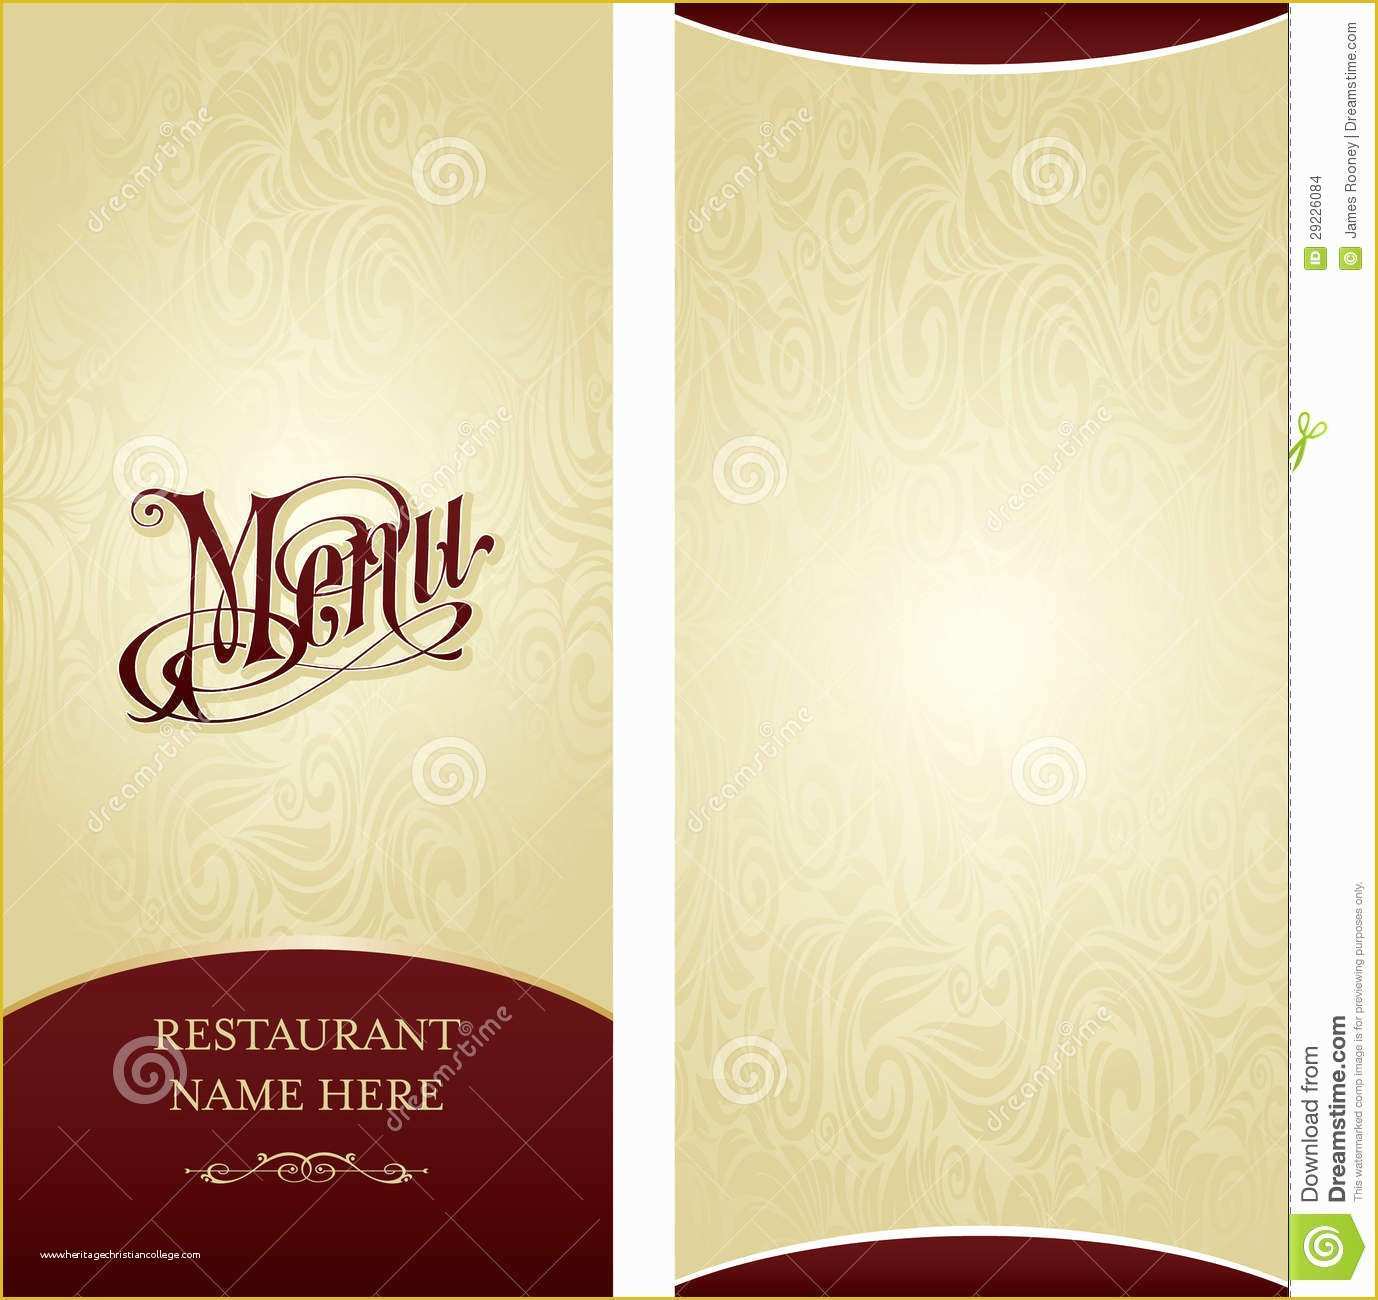 Cafe Menu Design Template Free Download Of Menu Design Template Stock Illustration Illustration Of